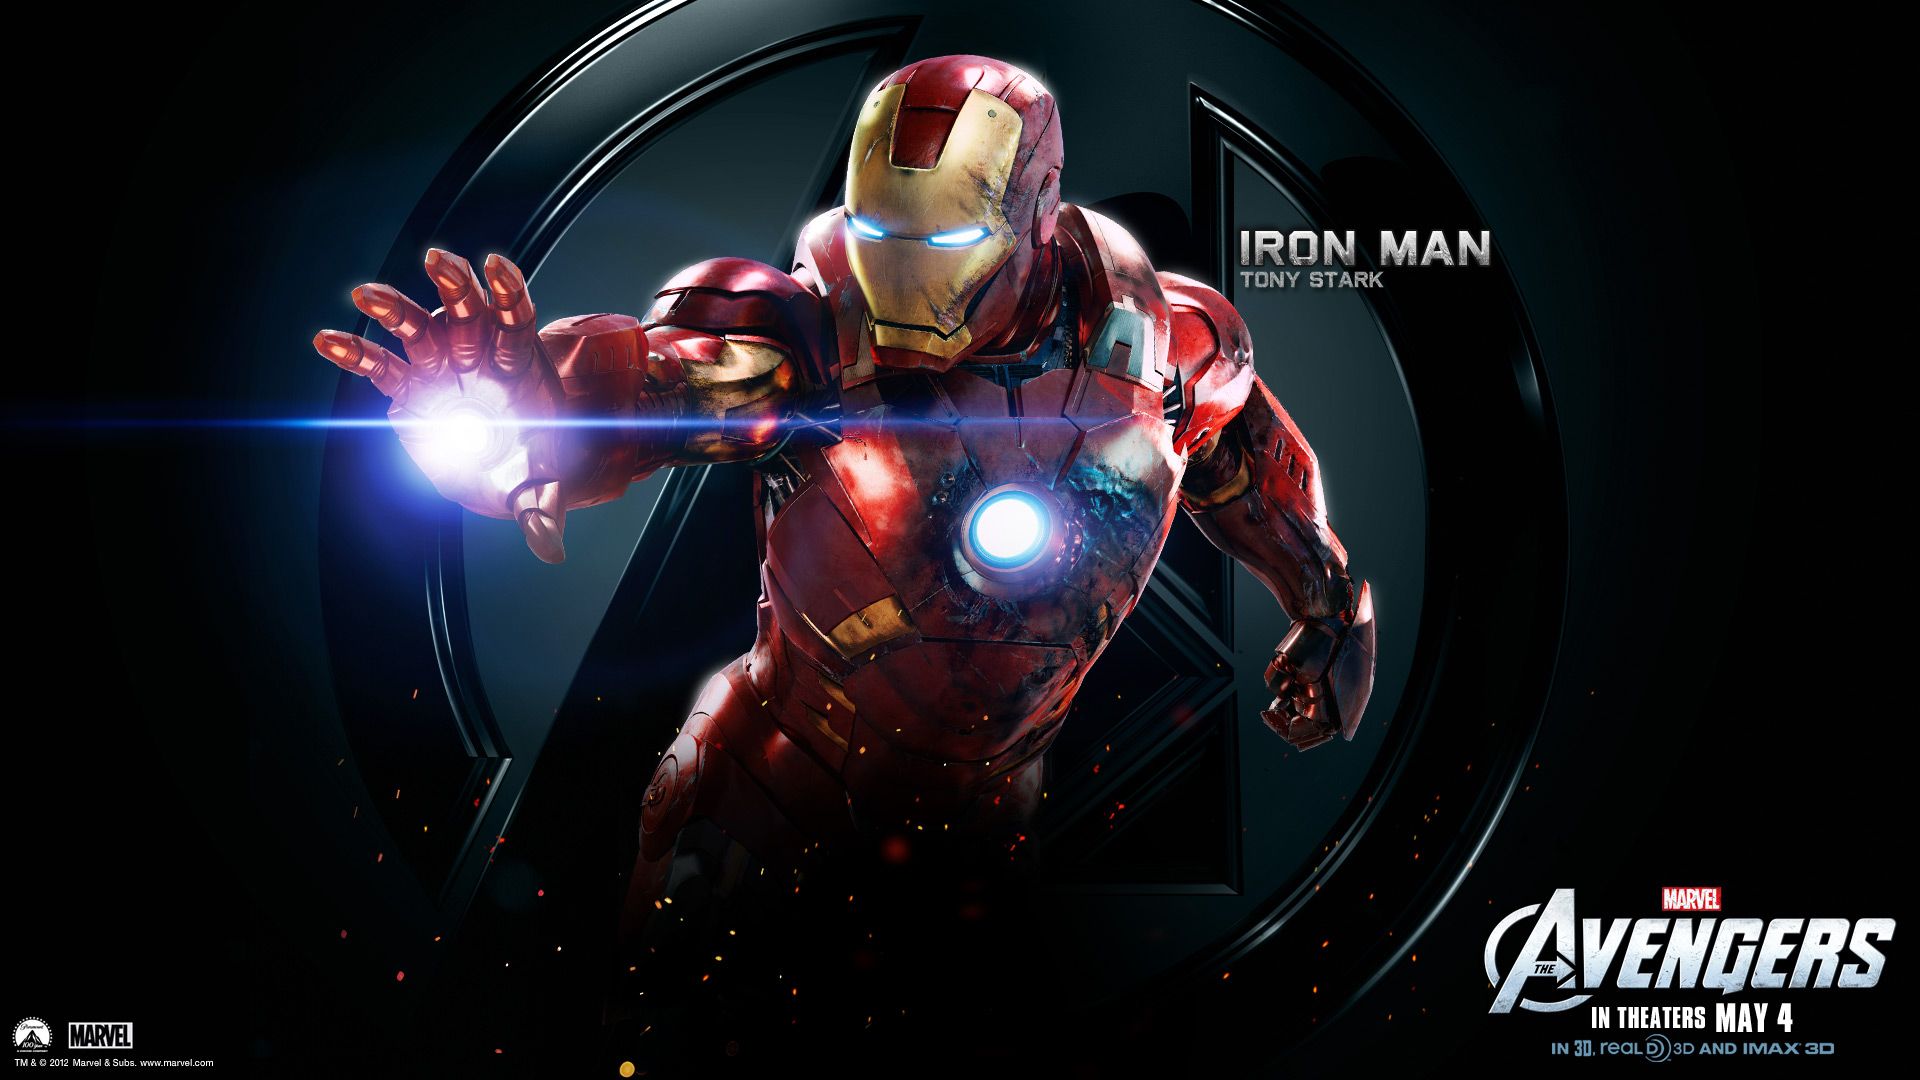 Avengers HD Movie Wallpaper The Iron Man